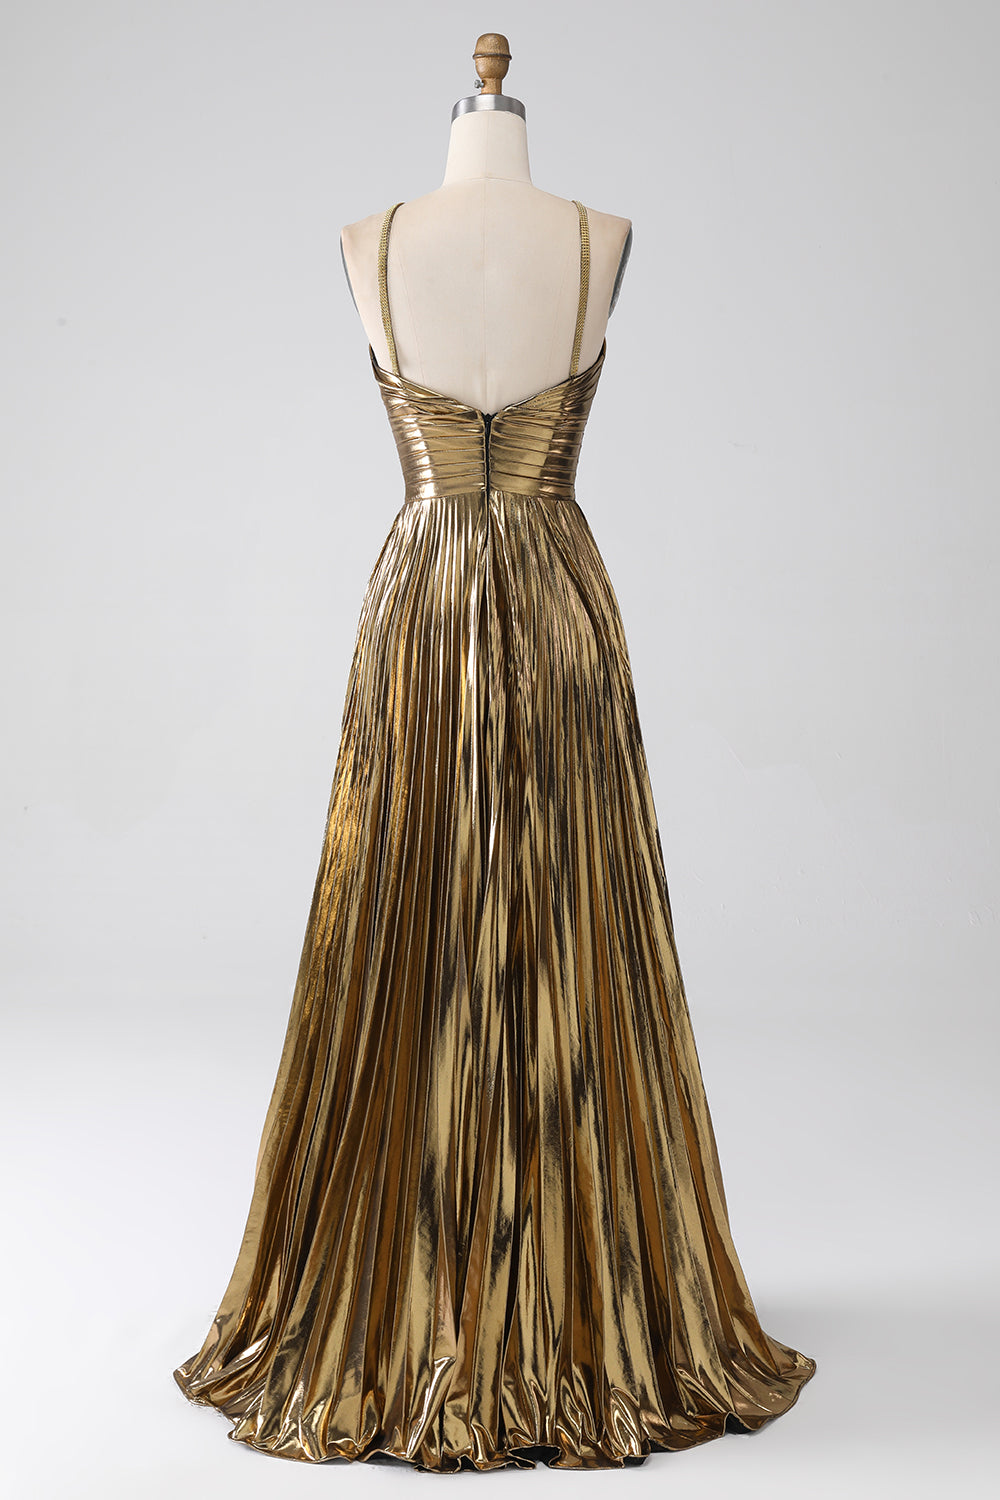 Fuchsia A-Line Spaghetti Straps Pleated Prom Dress with Slit